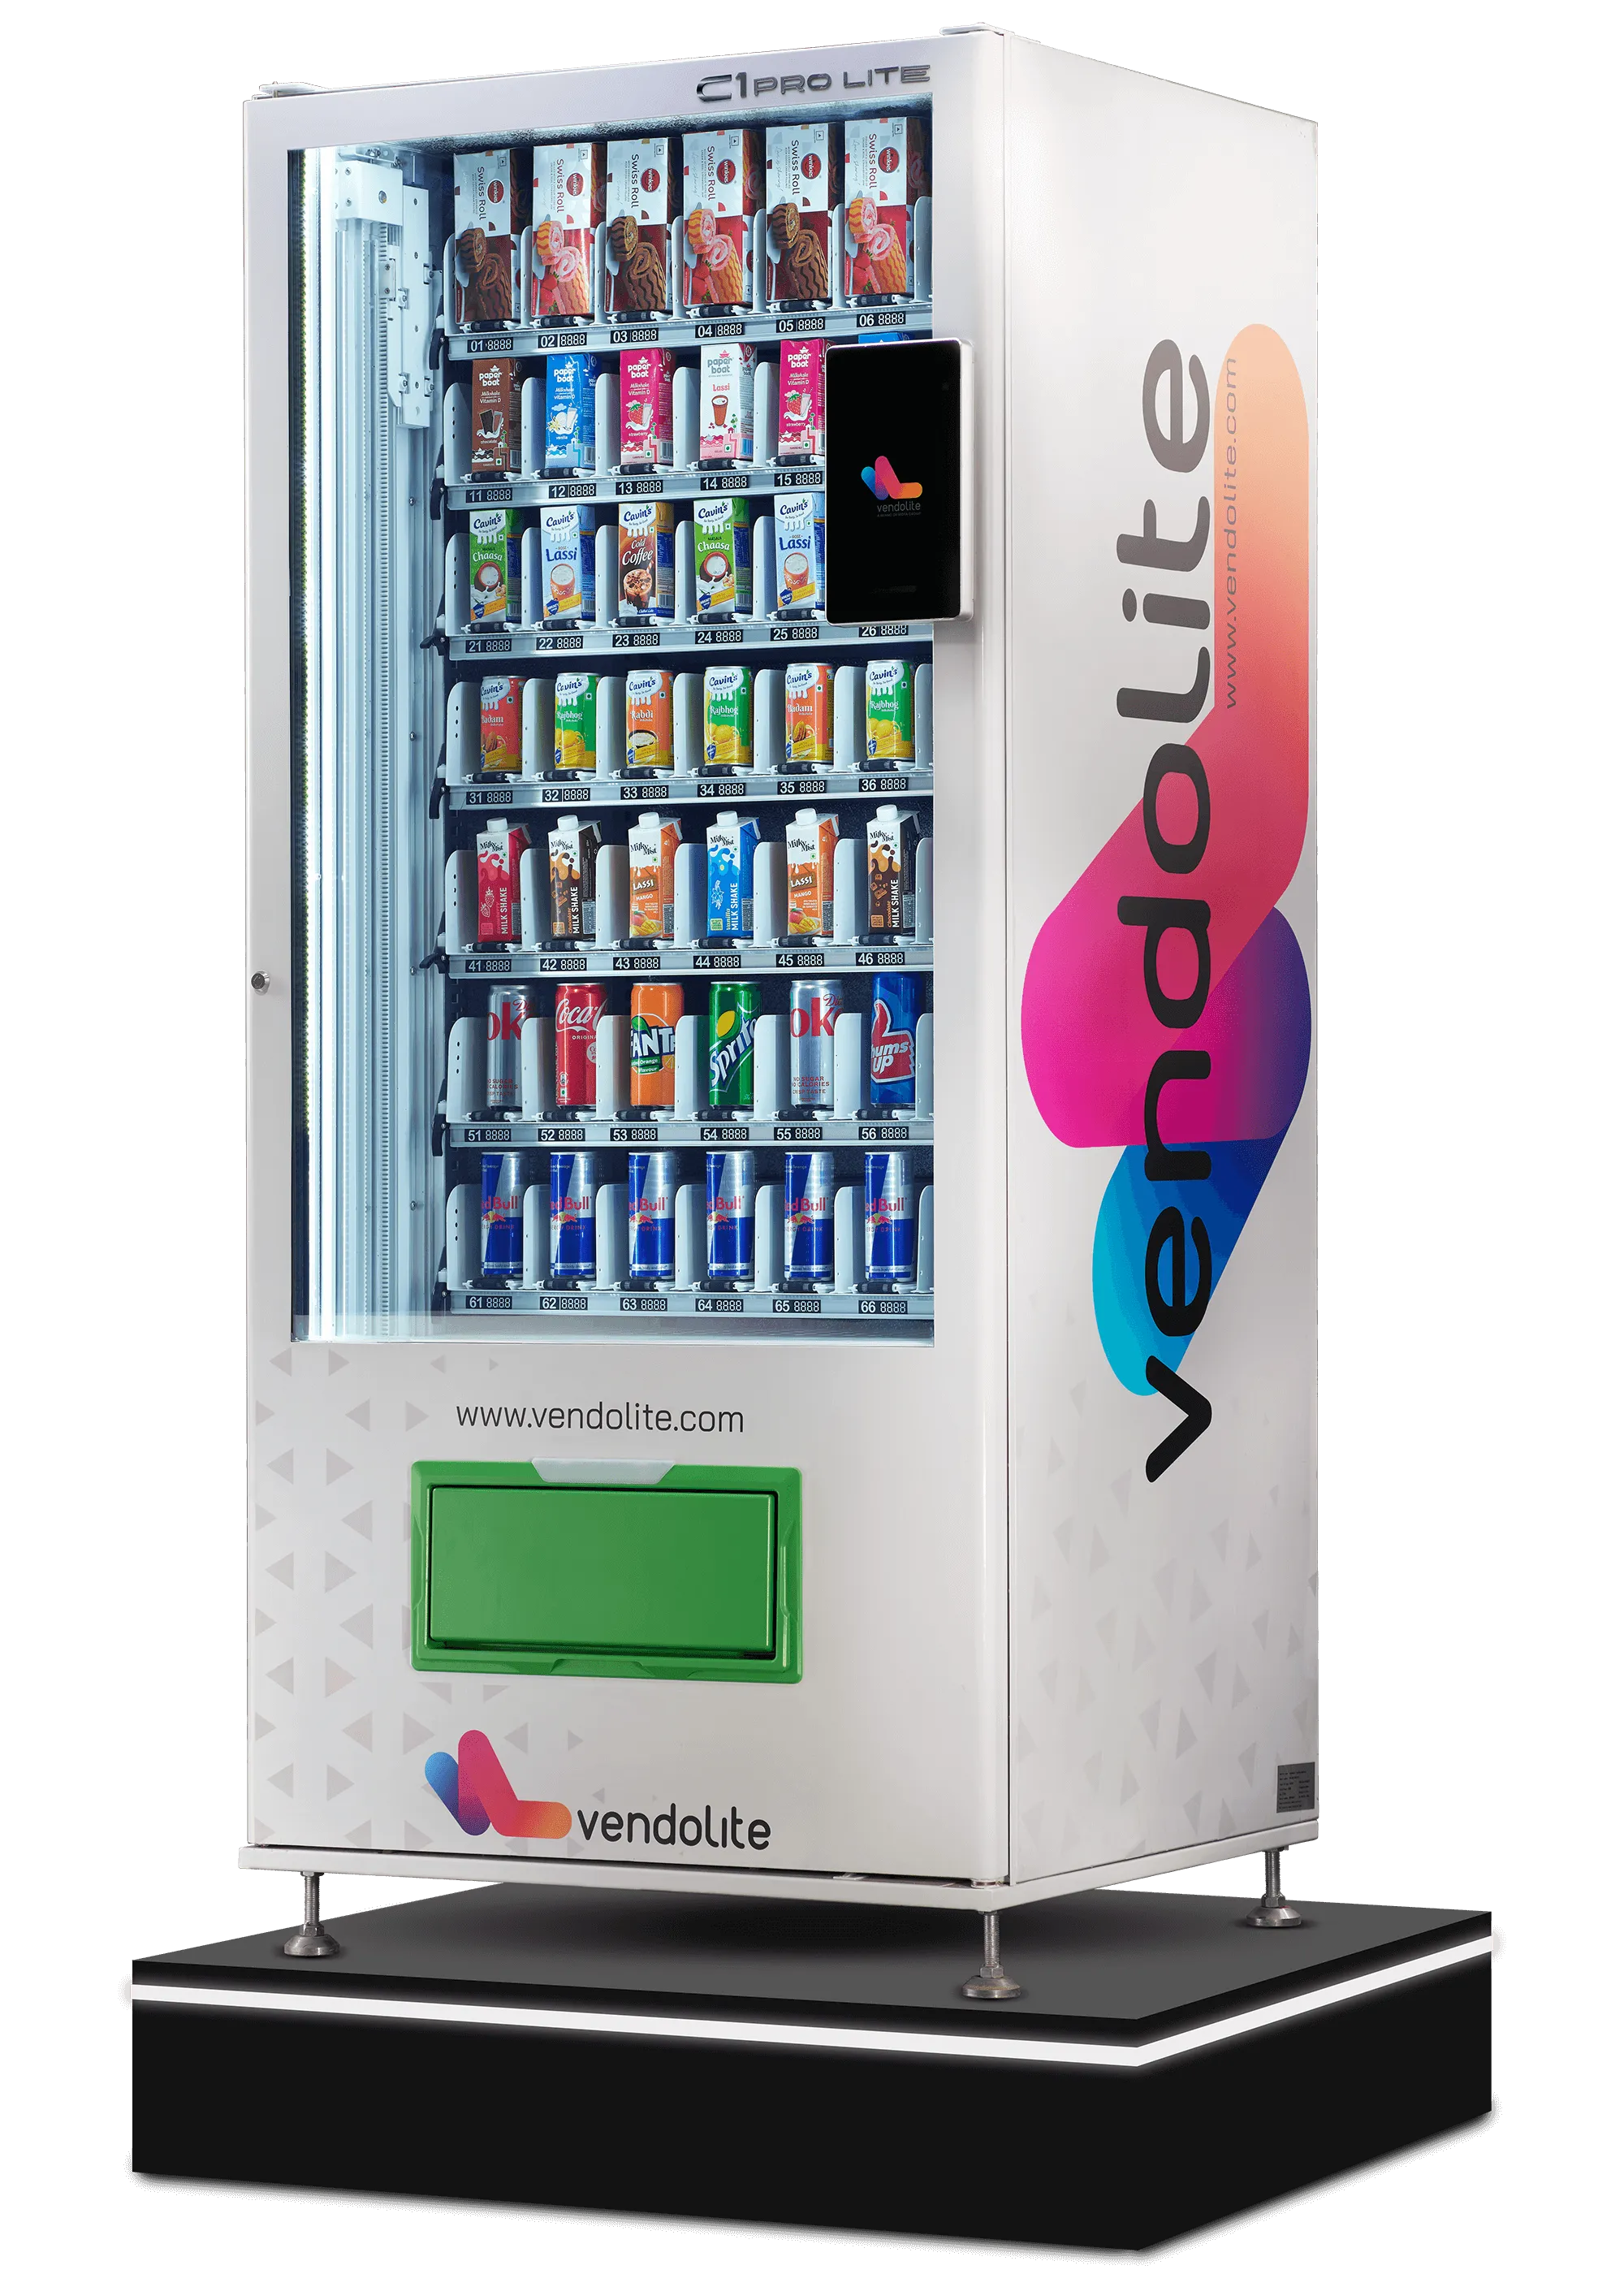 C1 Pro lite vending machine